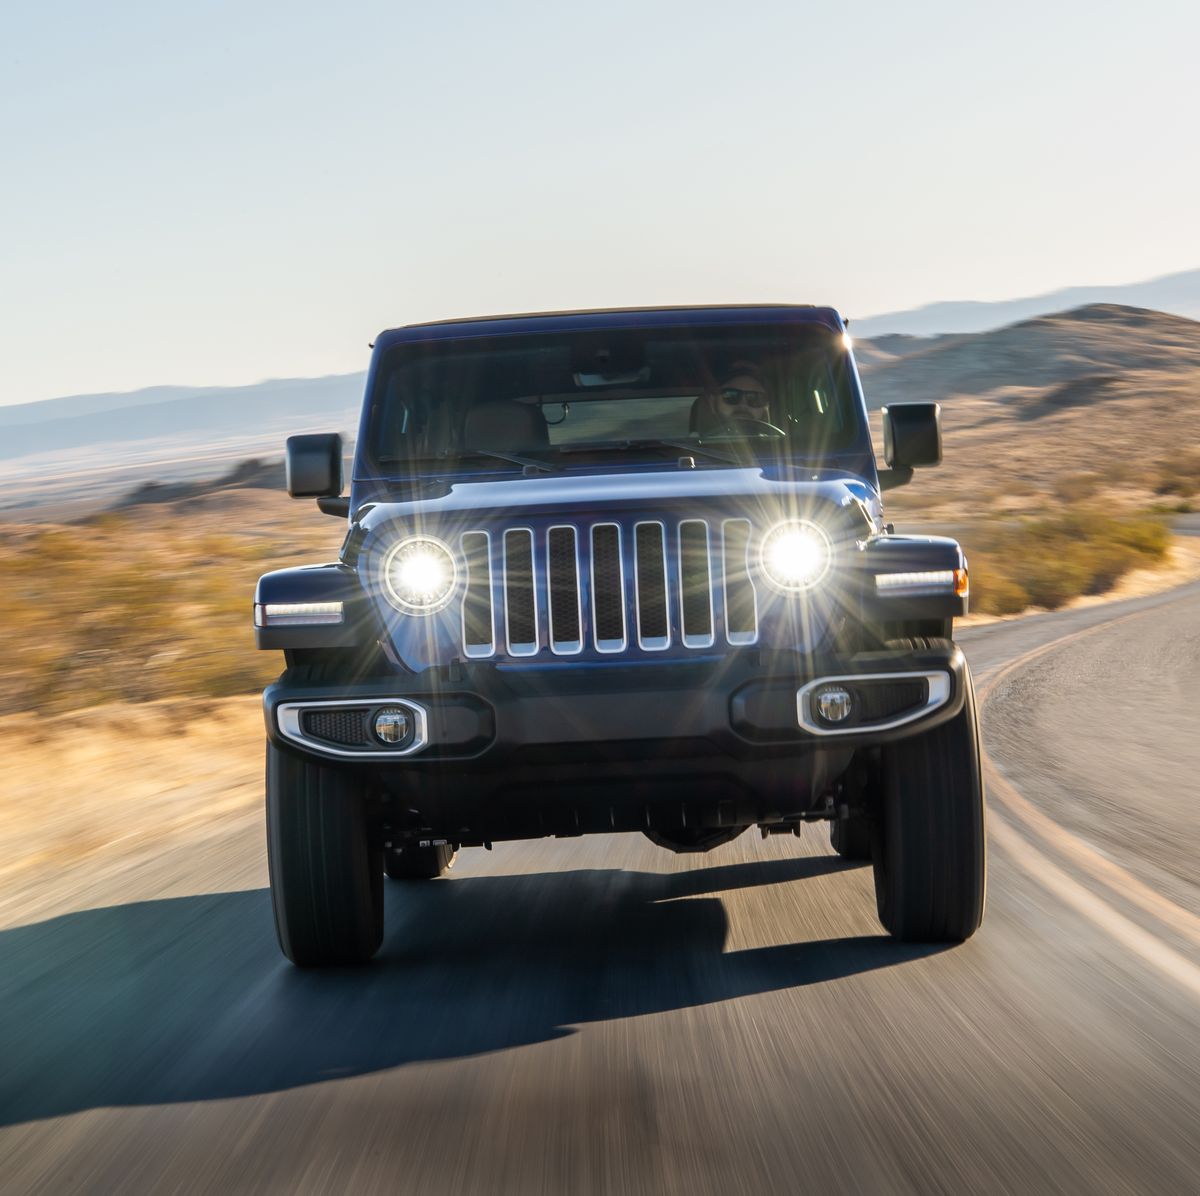 Jeep Wrangler Diesel Gets 29-MPG Highway EPA Fuel-Economy Rating